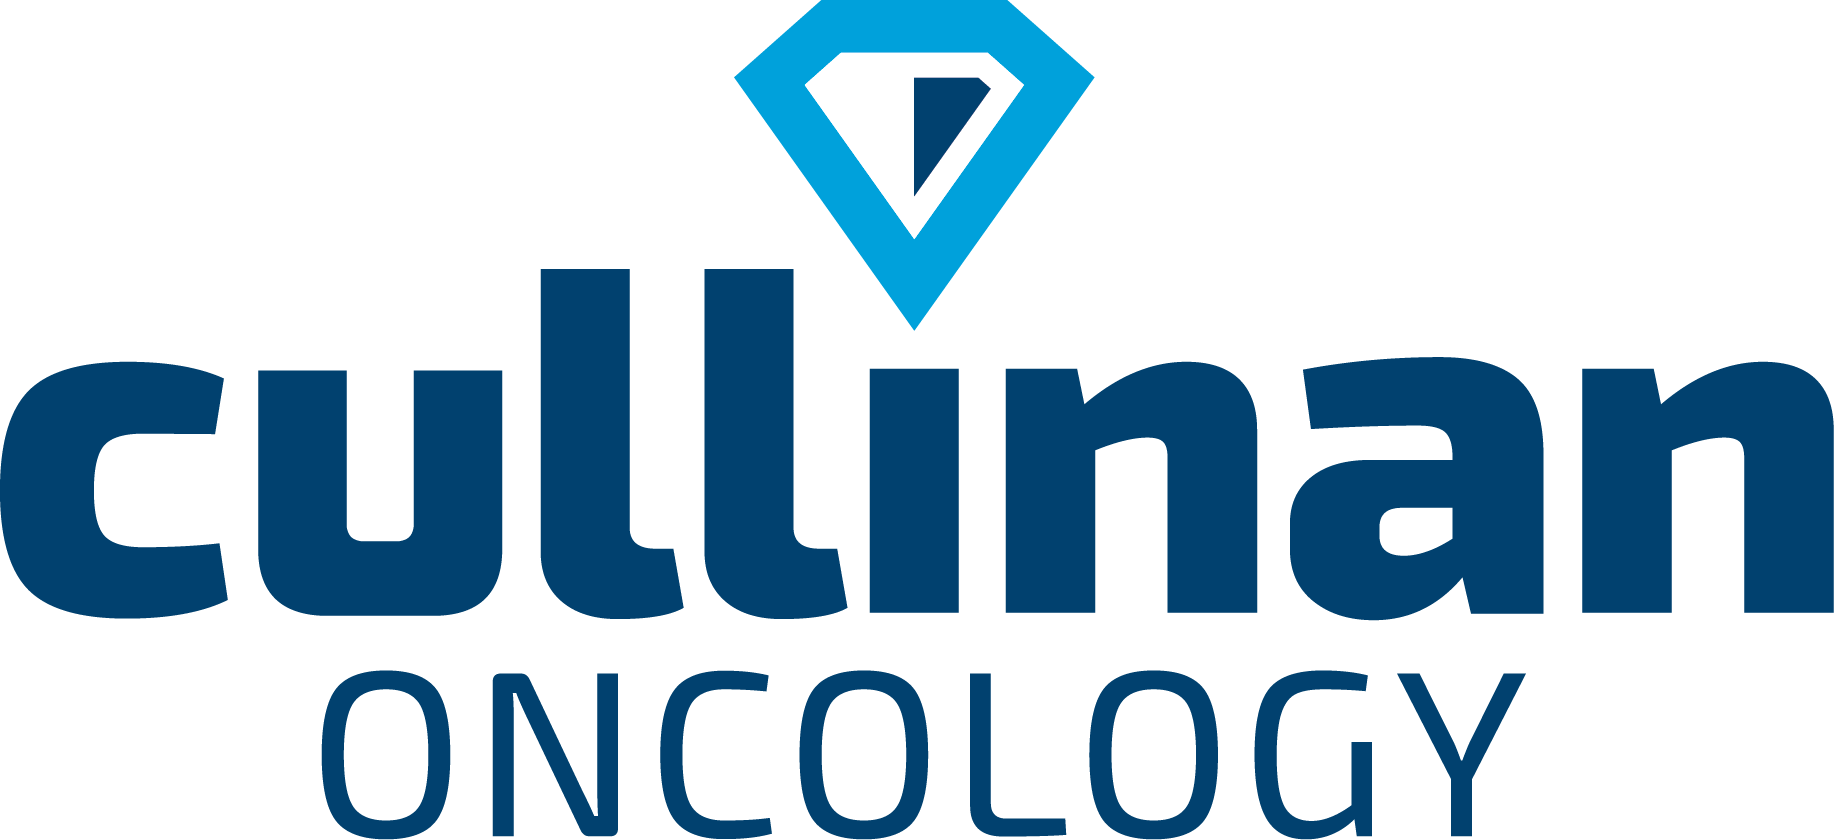 Cullinan Oncology to Host CLN-081 Regulatory Update Webinar on March 28, 2022